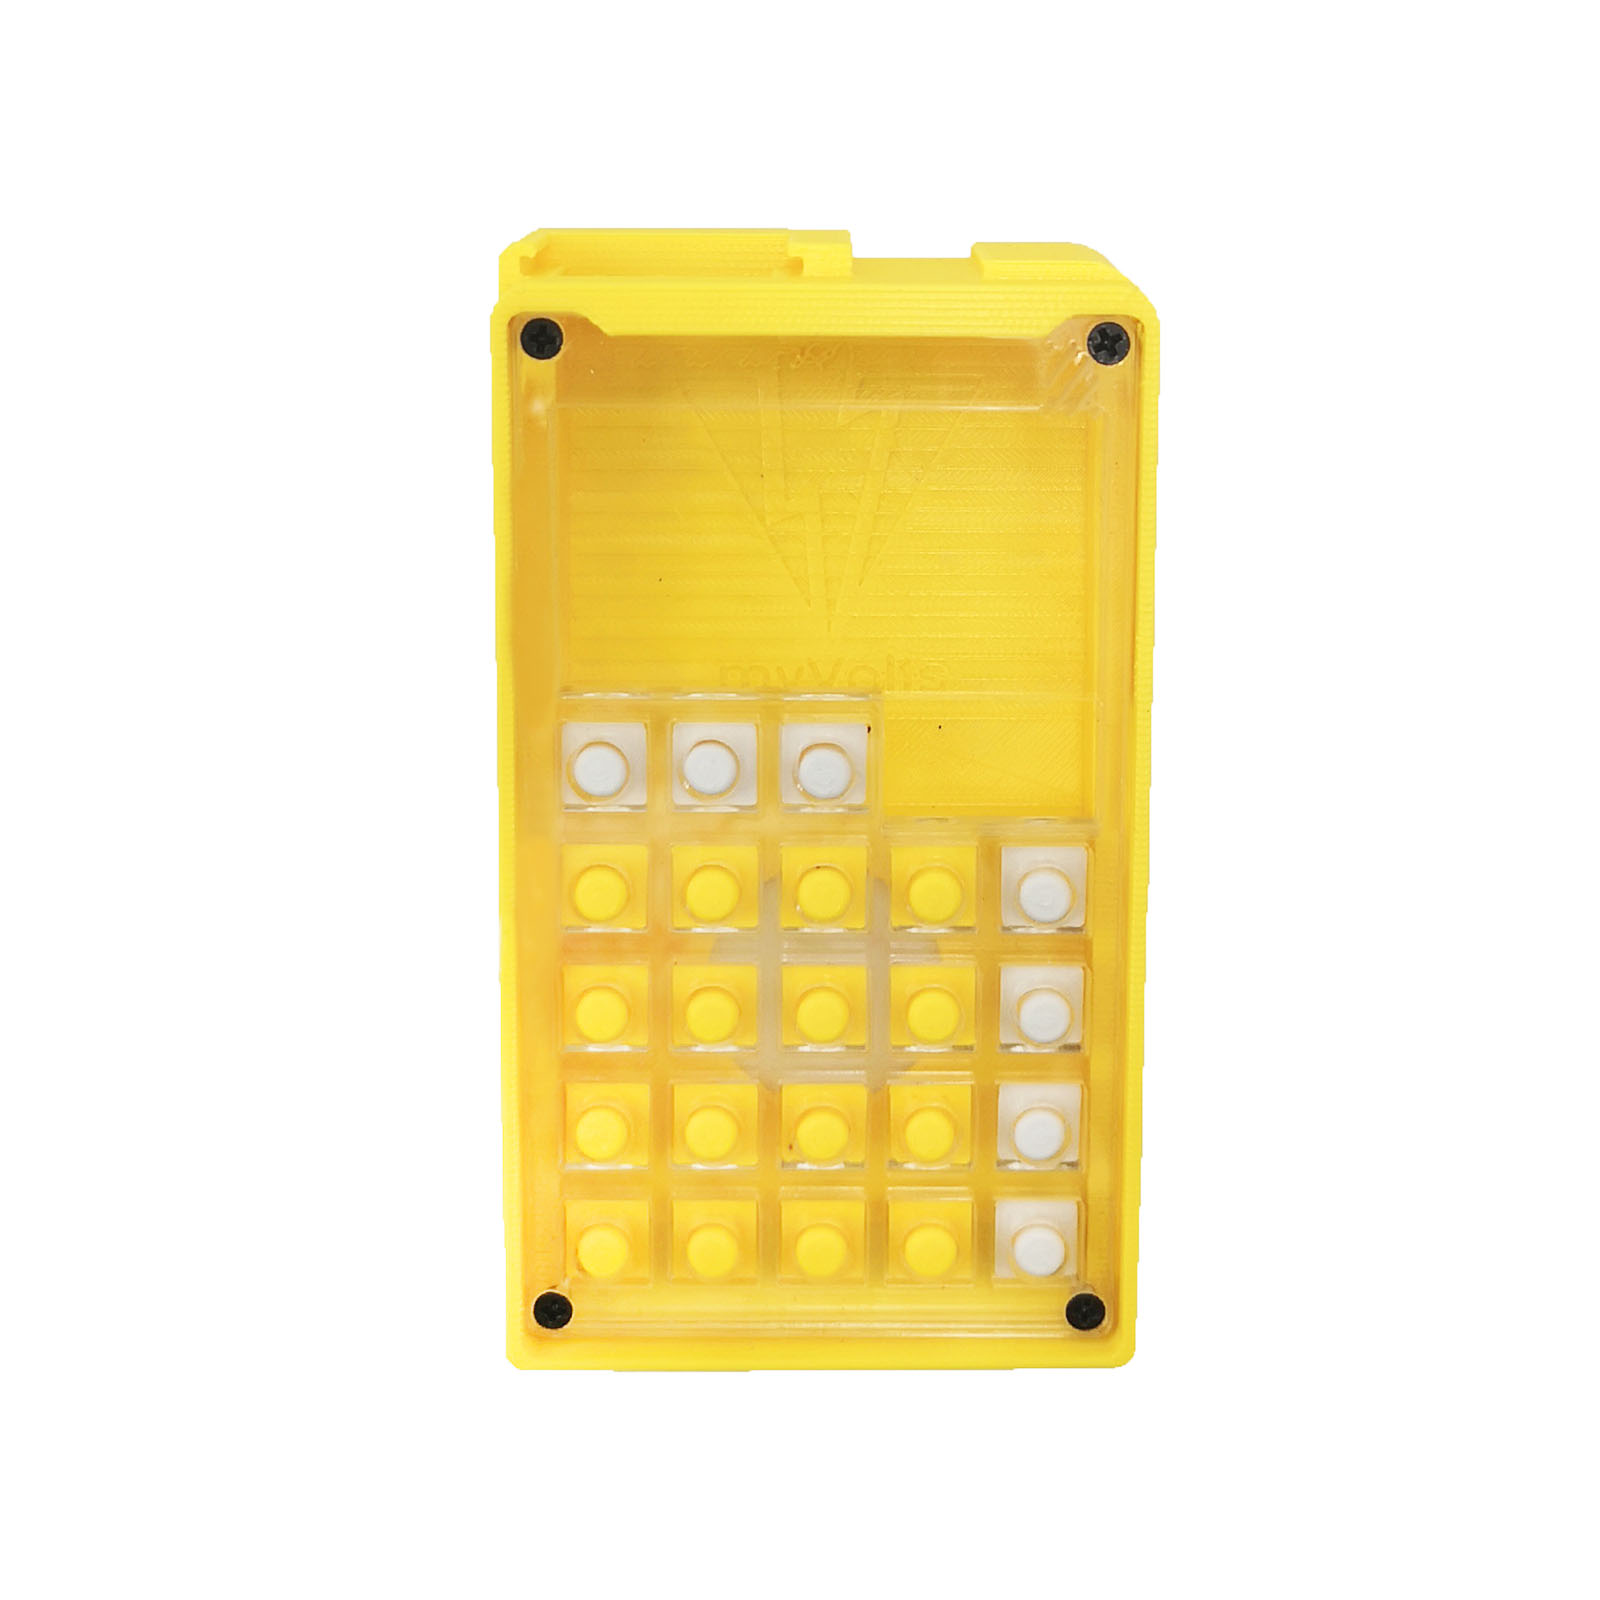 Pocket Operator Case - Yellow